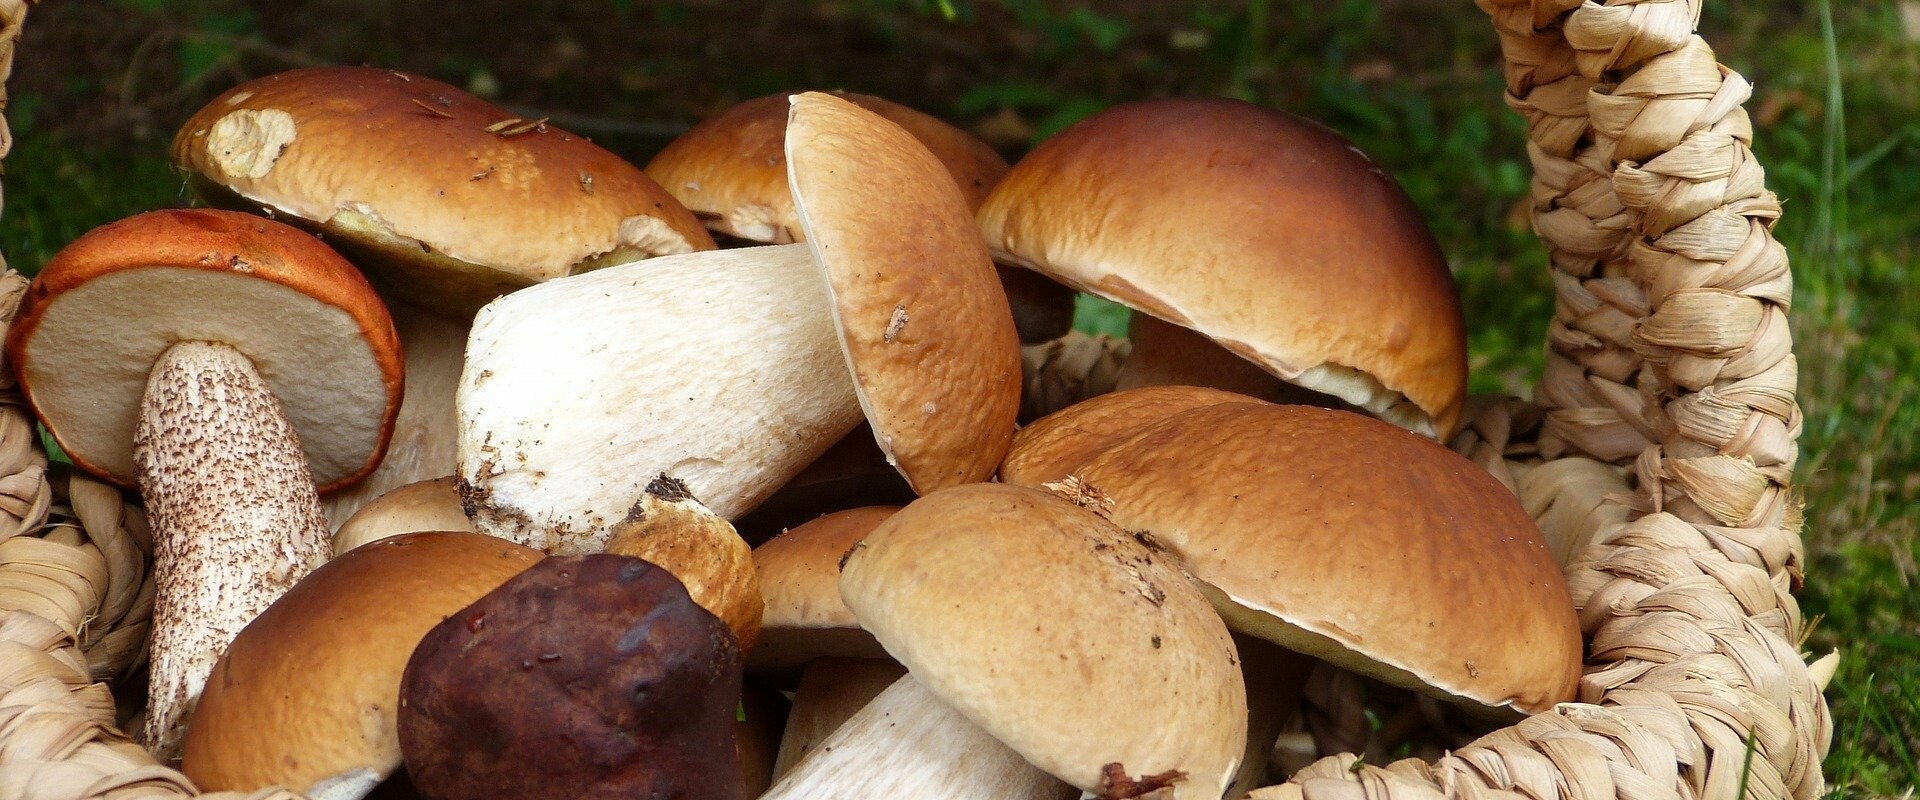 разновидности белых грибов с фото и названиями